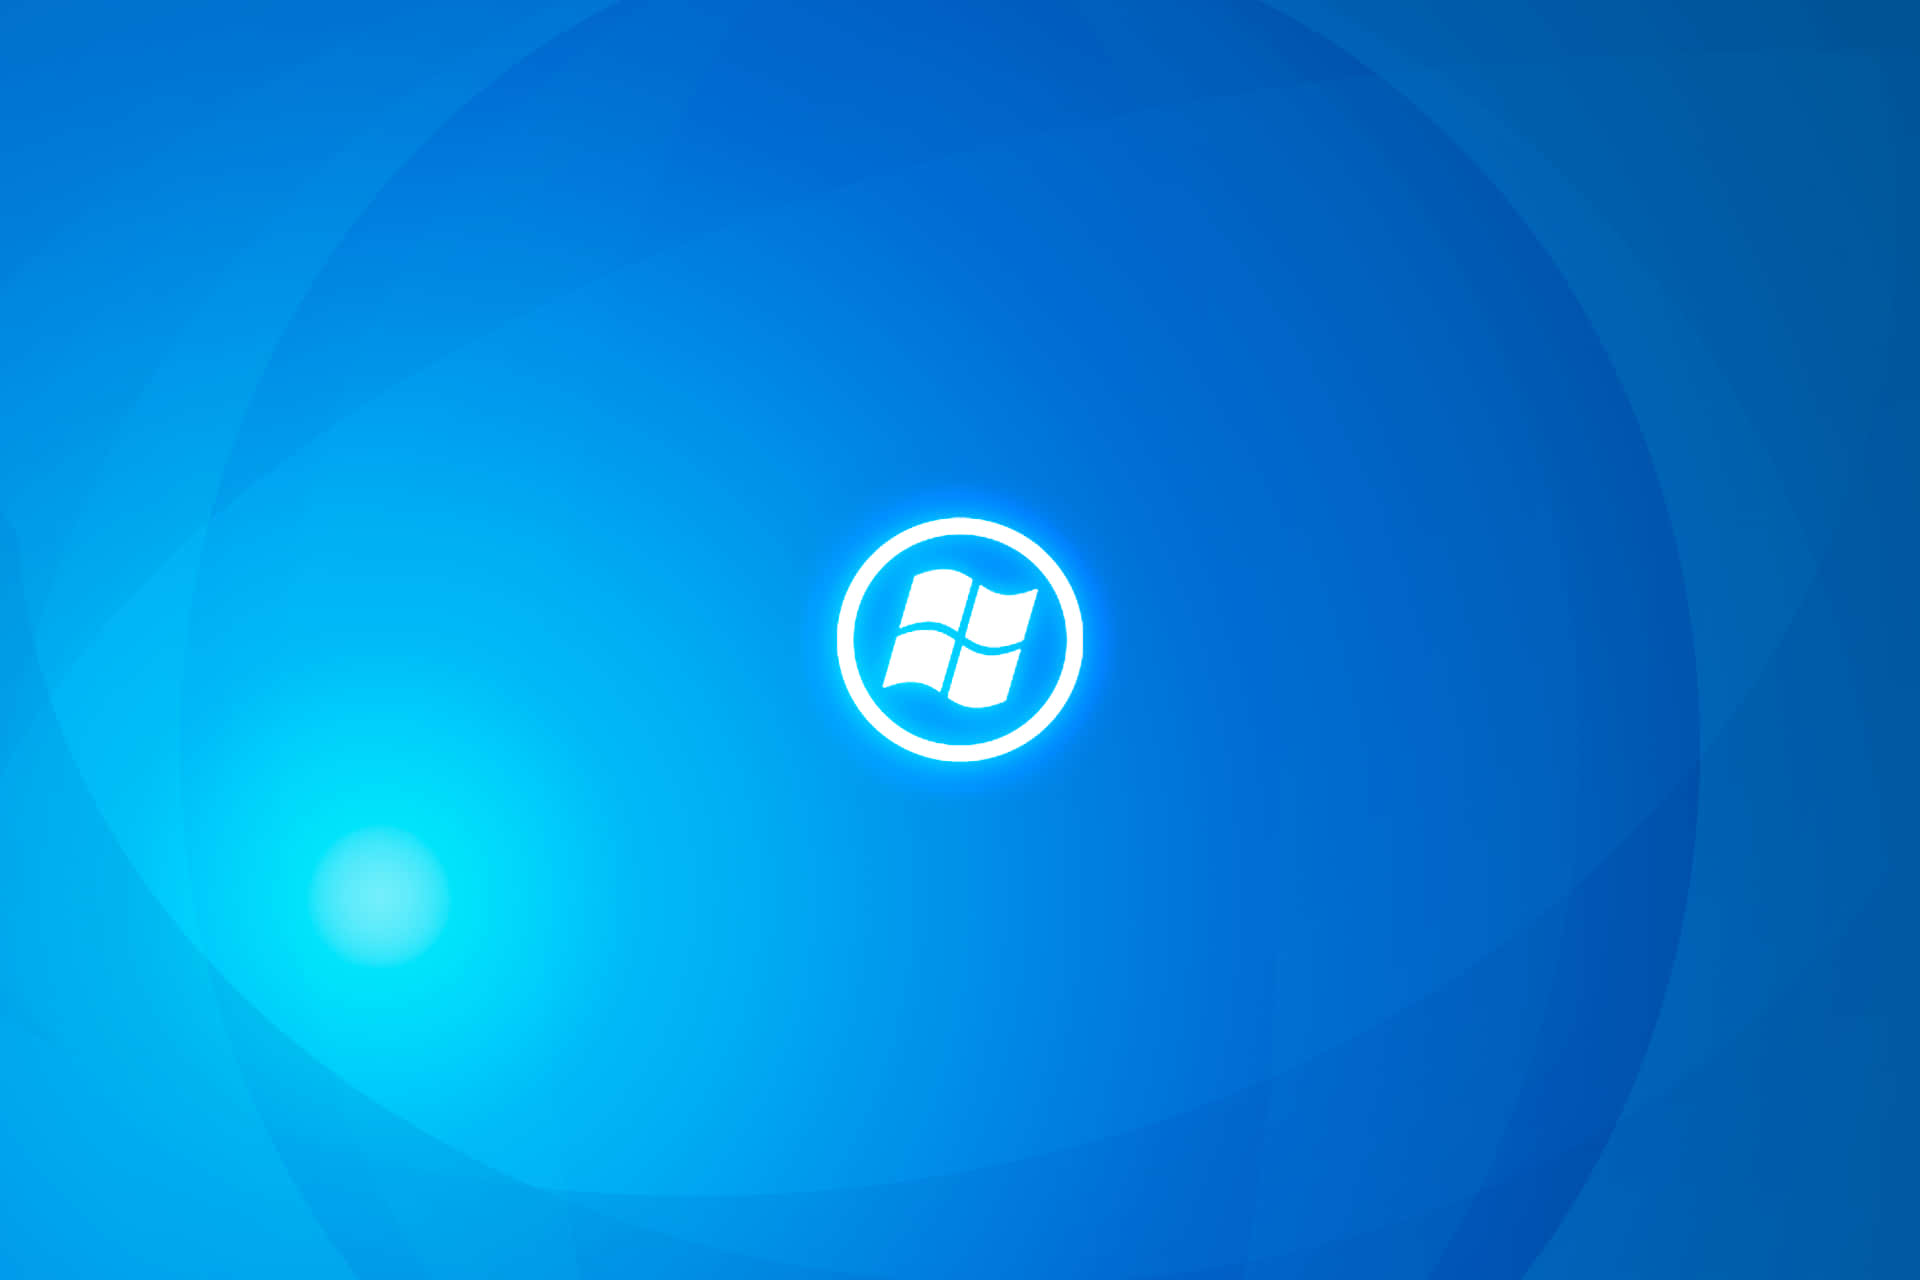 Desatael Poder De Windows 10